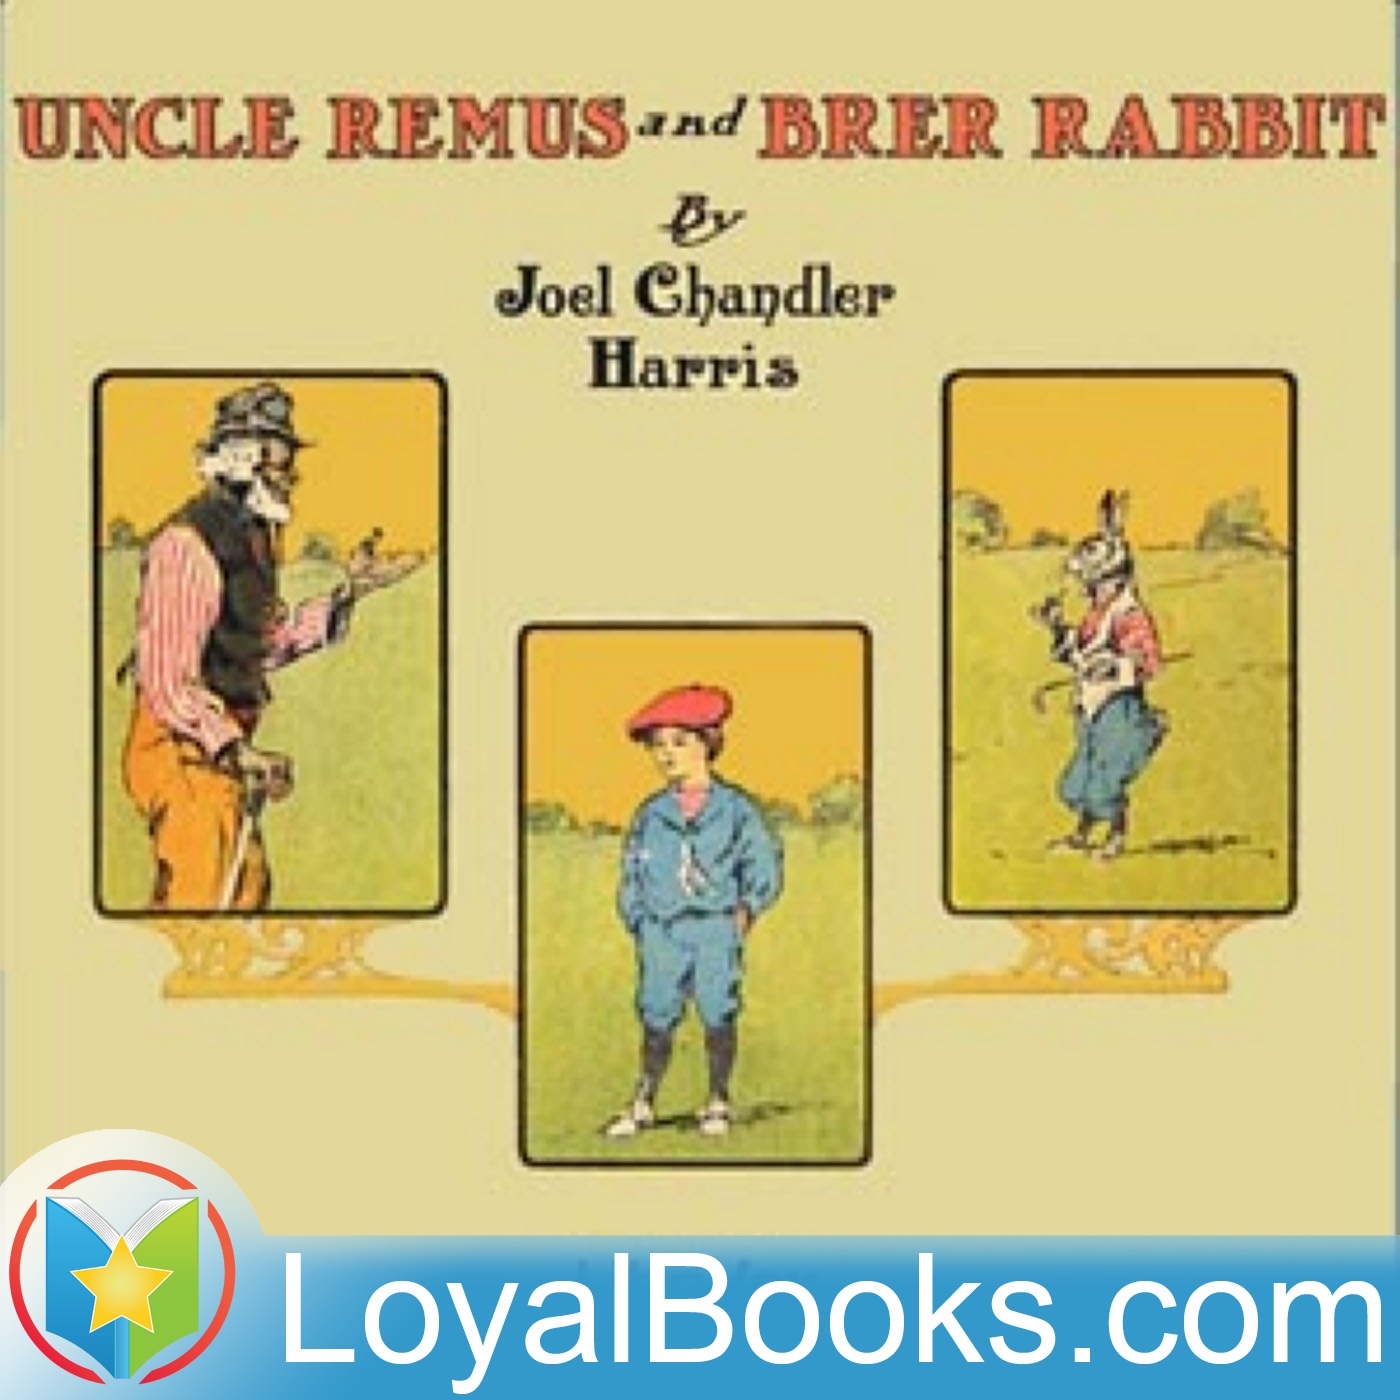 Uncle Remus and Brer Rabbit by Joel Chandler Harris